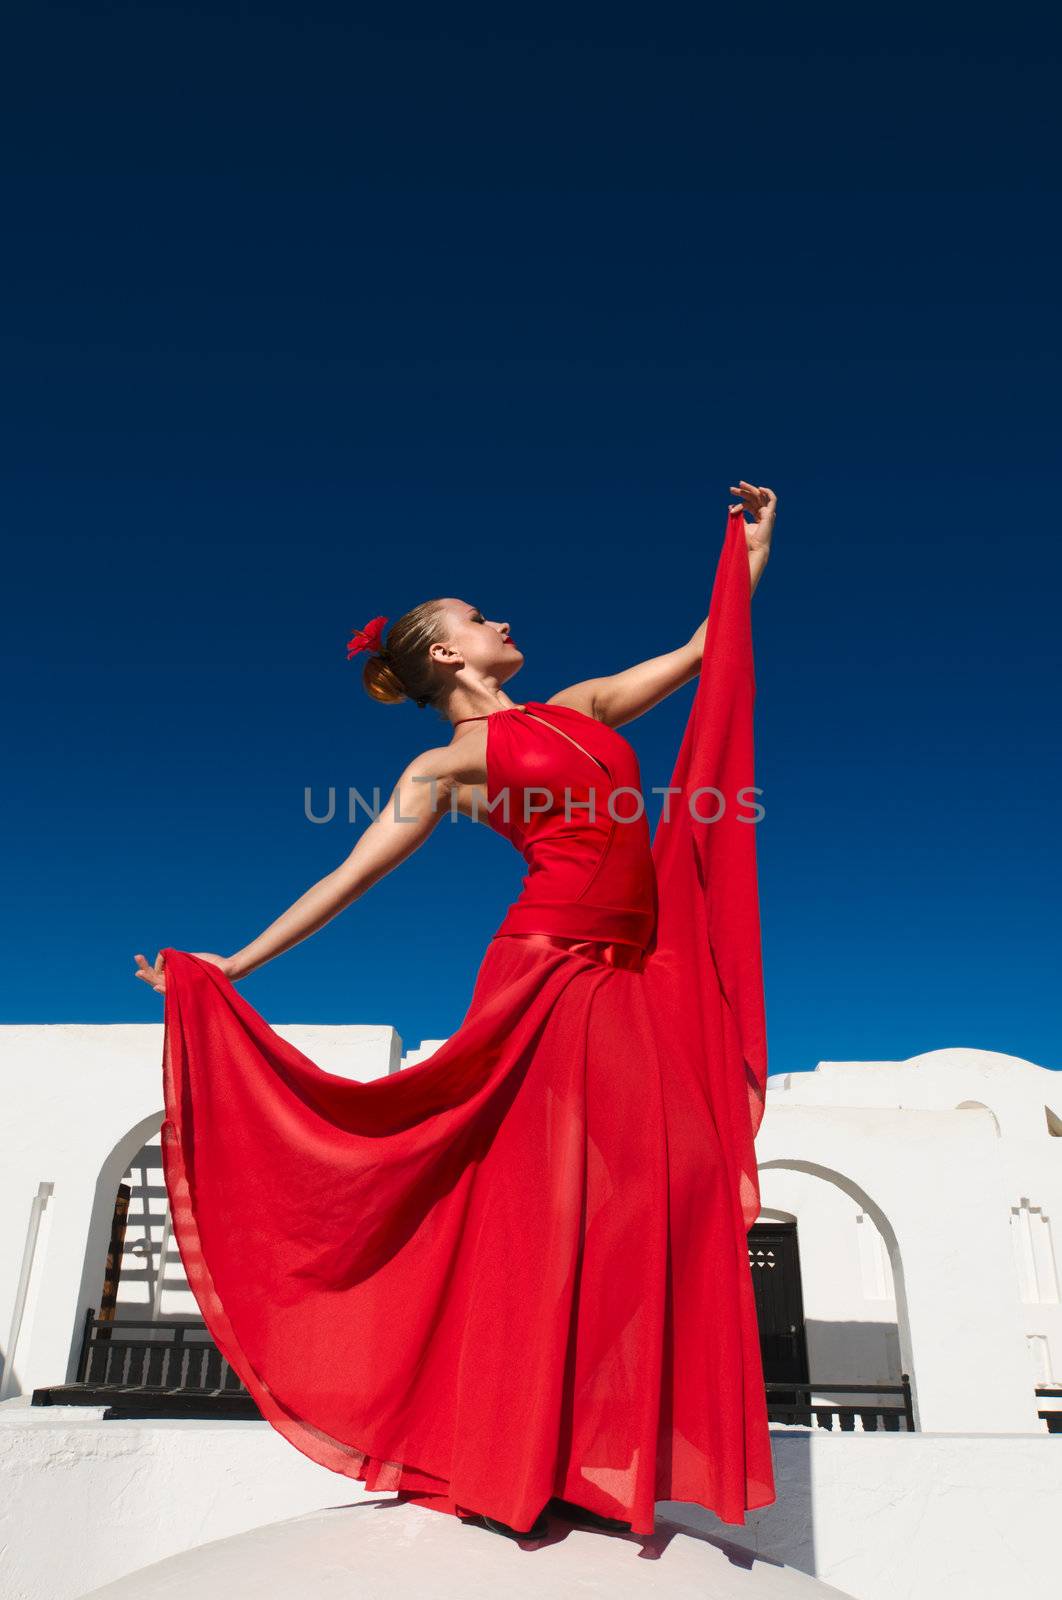 Flamenco dancer by nikitabuida